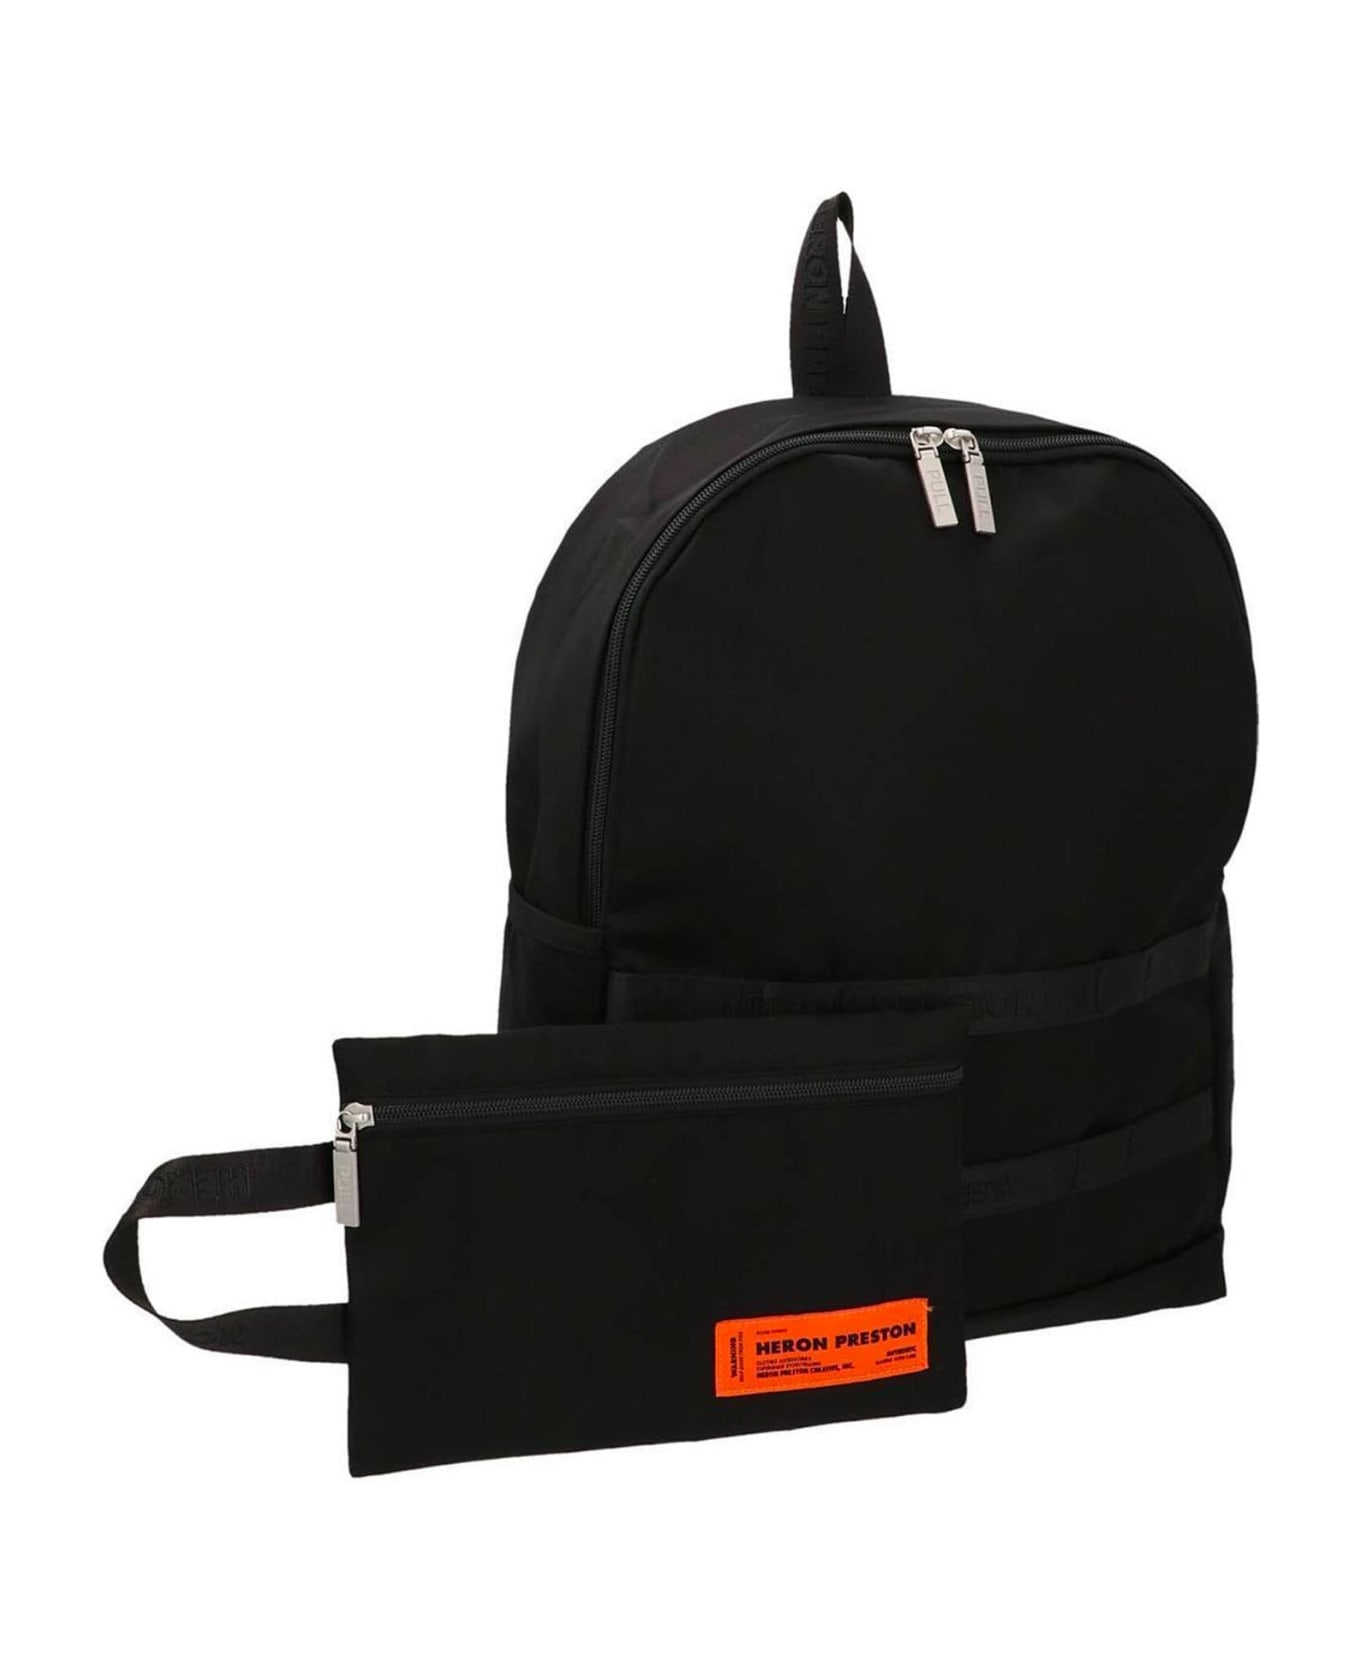 HERON PRESTON Logo Backpack - Black